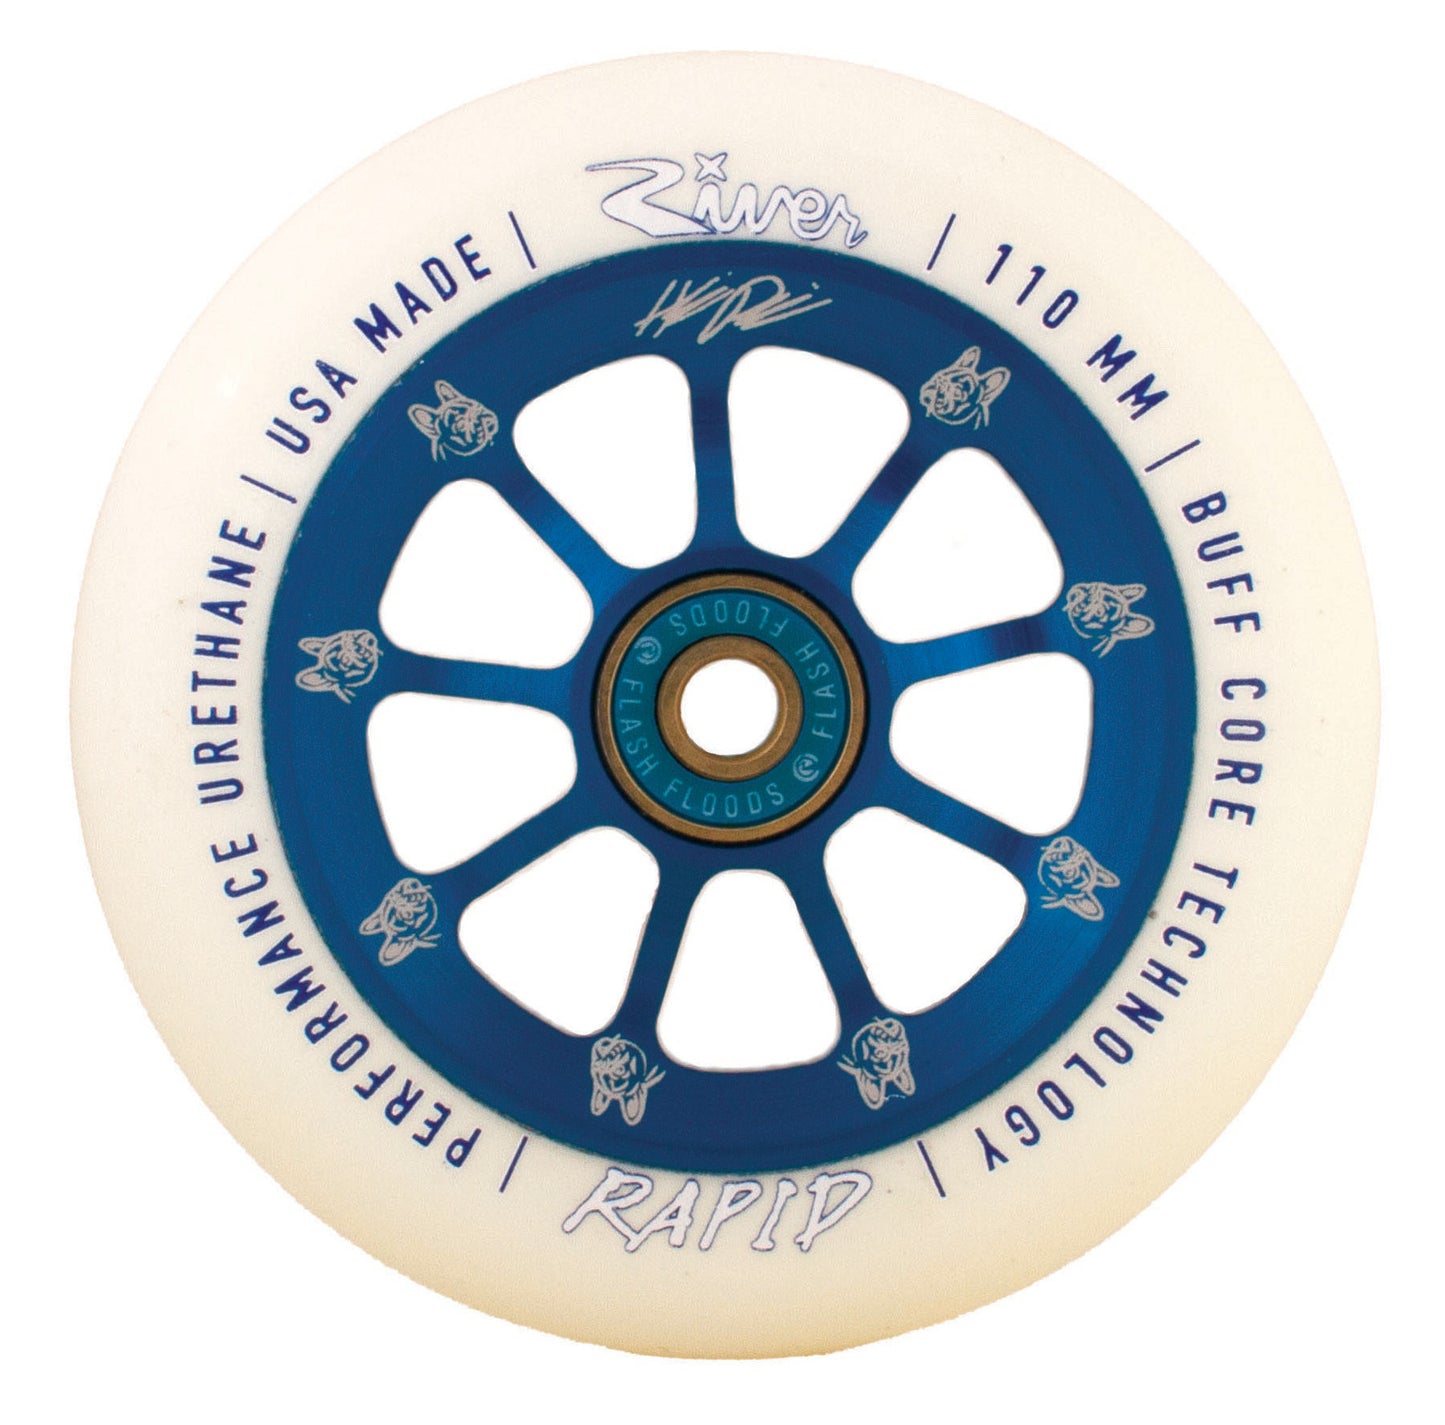 River Wheel Co – “Pablo” Rapids 110mm (Helmeri Pirinen Signature)